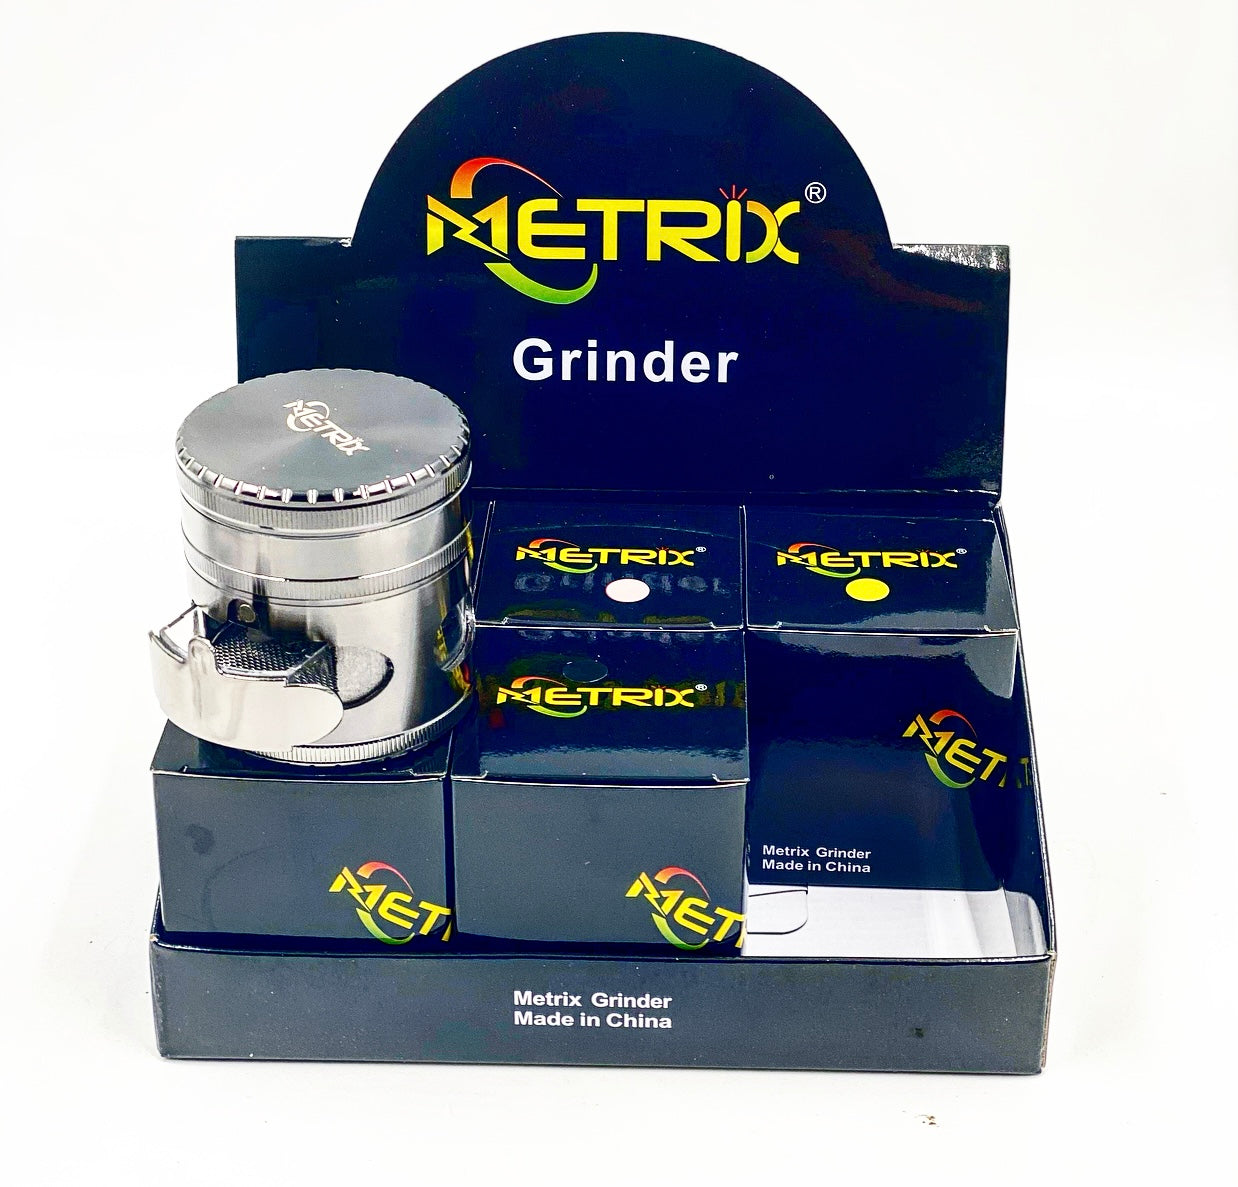 METRIX GRINDER 3/ METRIX GRINDER 63 MM 4 LAYERS WITH OUTSIDE WINDOW